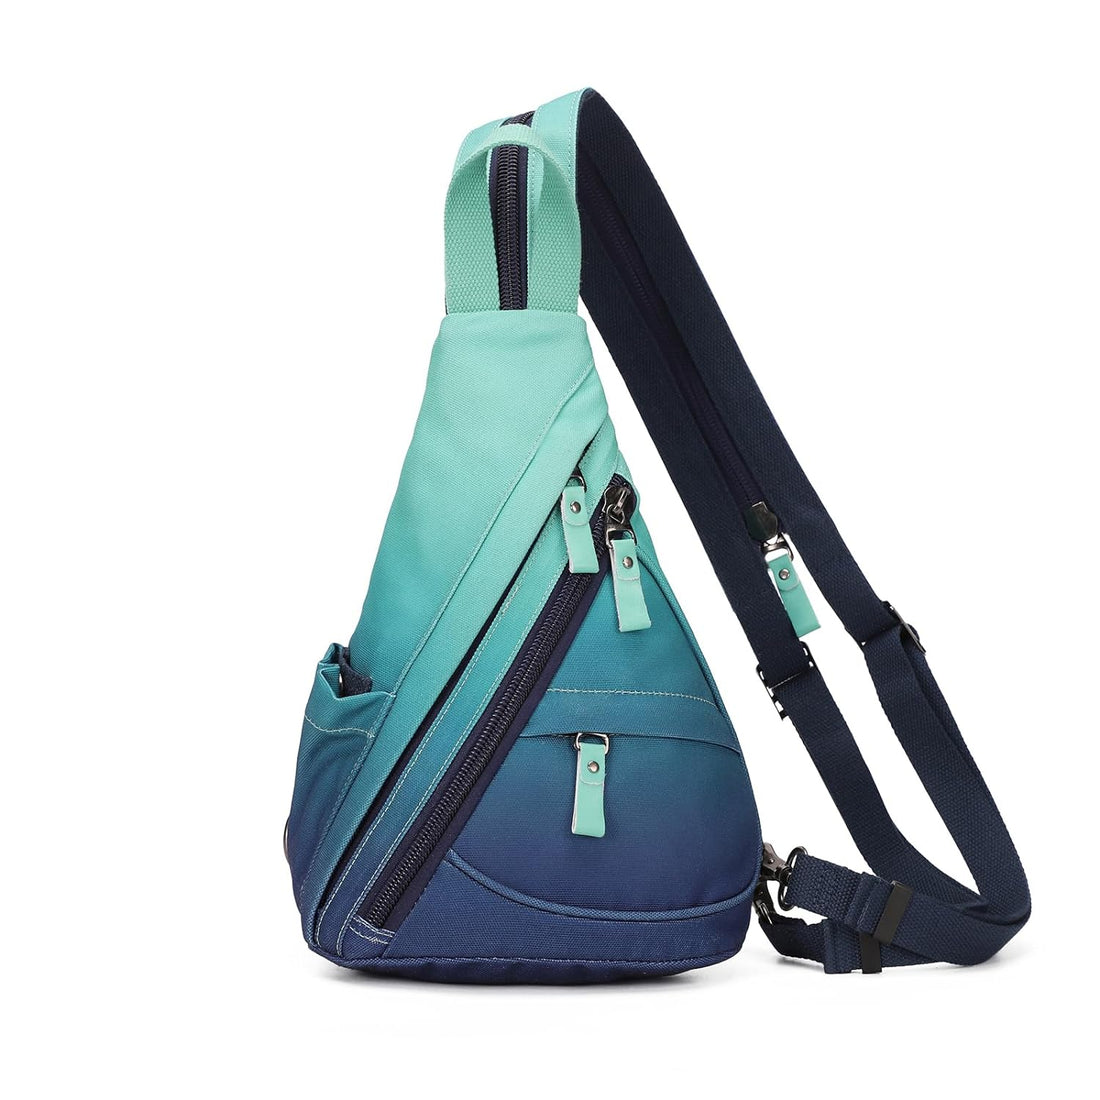 KL928 Sling Bag - Small Crossbody Backpack Shoulder Casual Daypack Rucksack for Men Women, 6881mr-blue+grayishgreen, Medium Size, Sling Bag